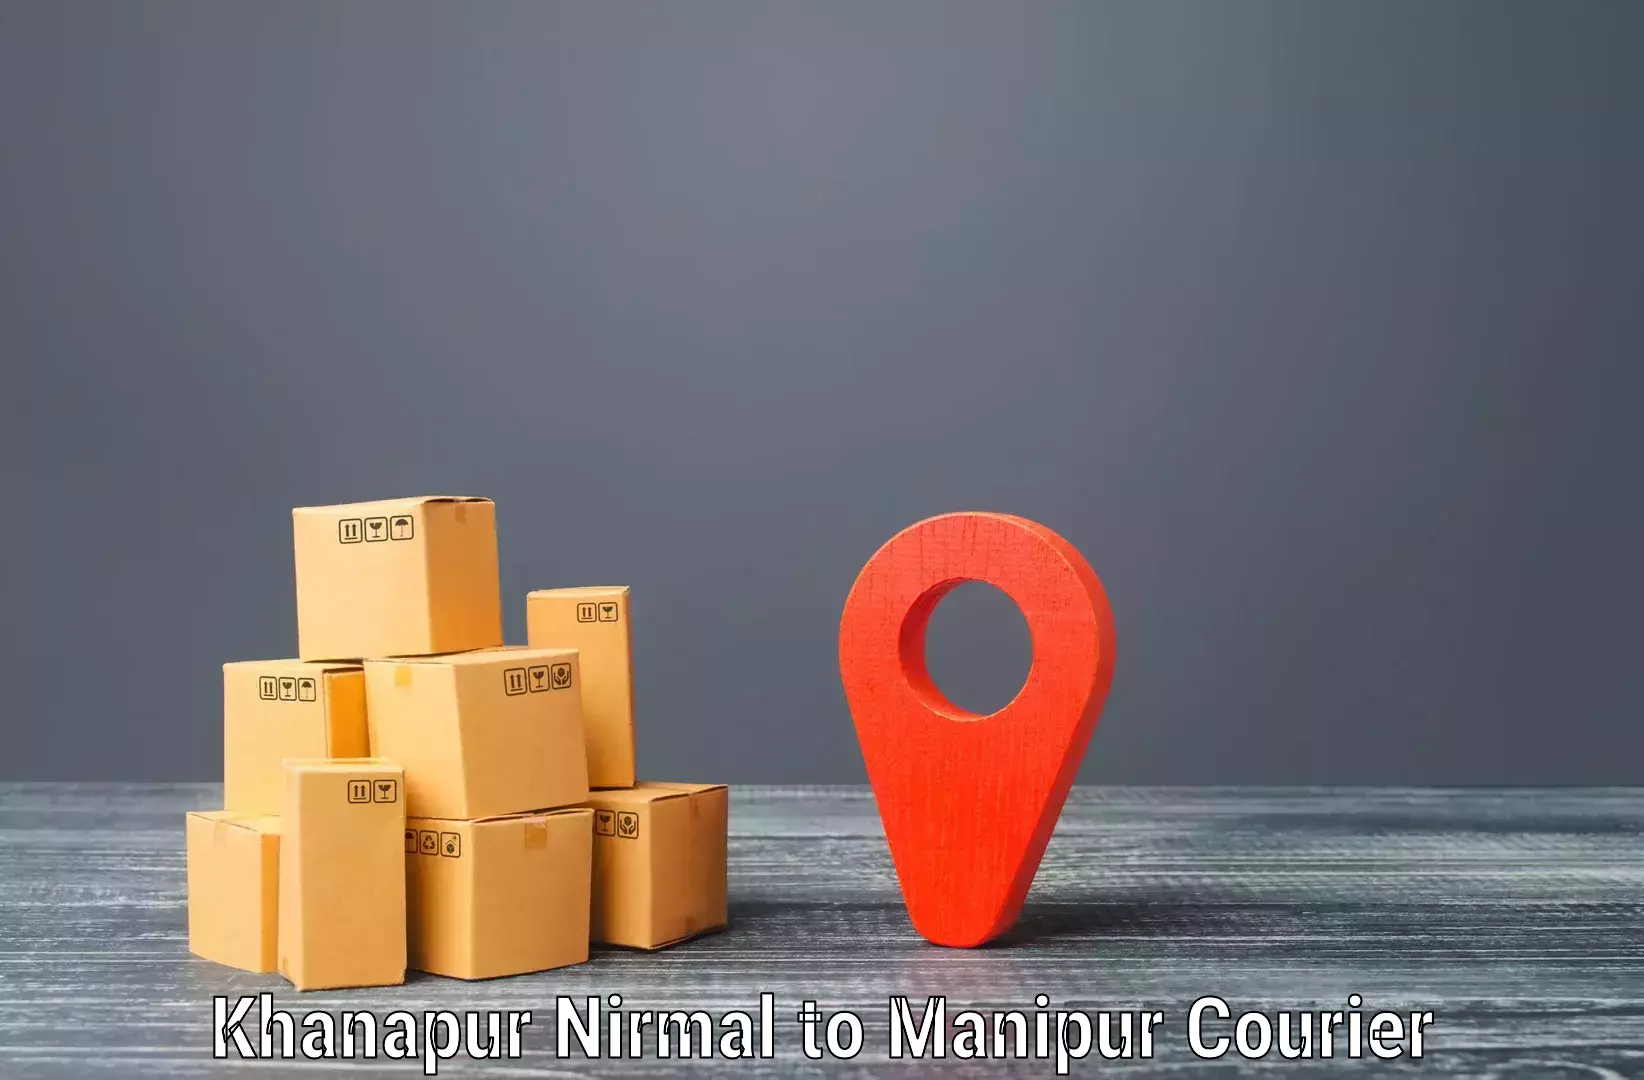 Cash on delivery service Khanapur Nirmal to Thoubal